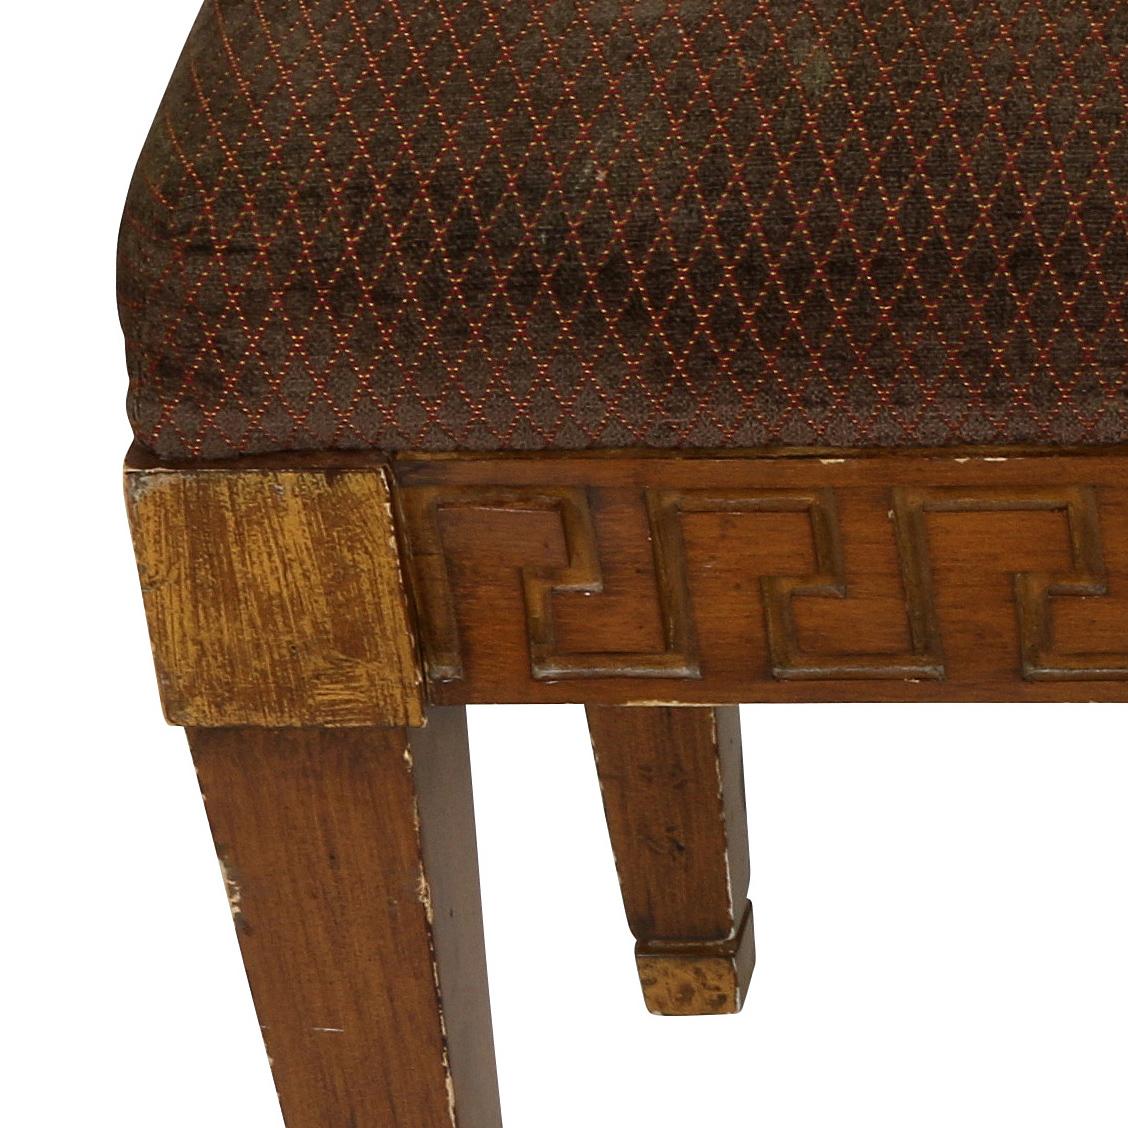 Vintage wood bench with carved greek key design to apron and upholstered with trellis pattern dark velvet.